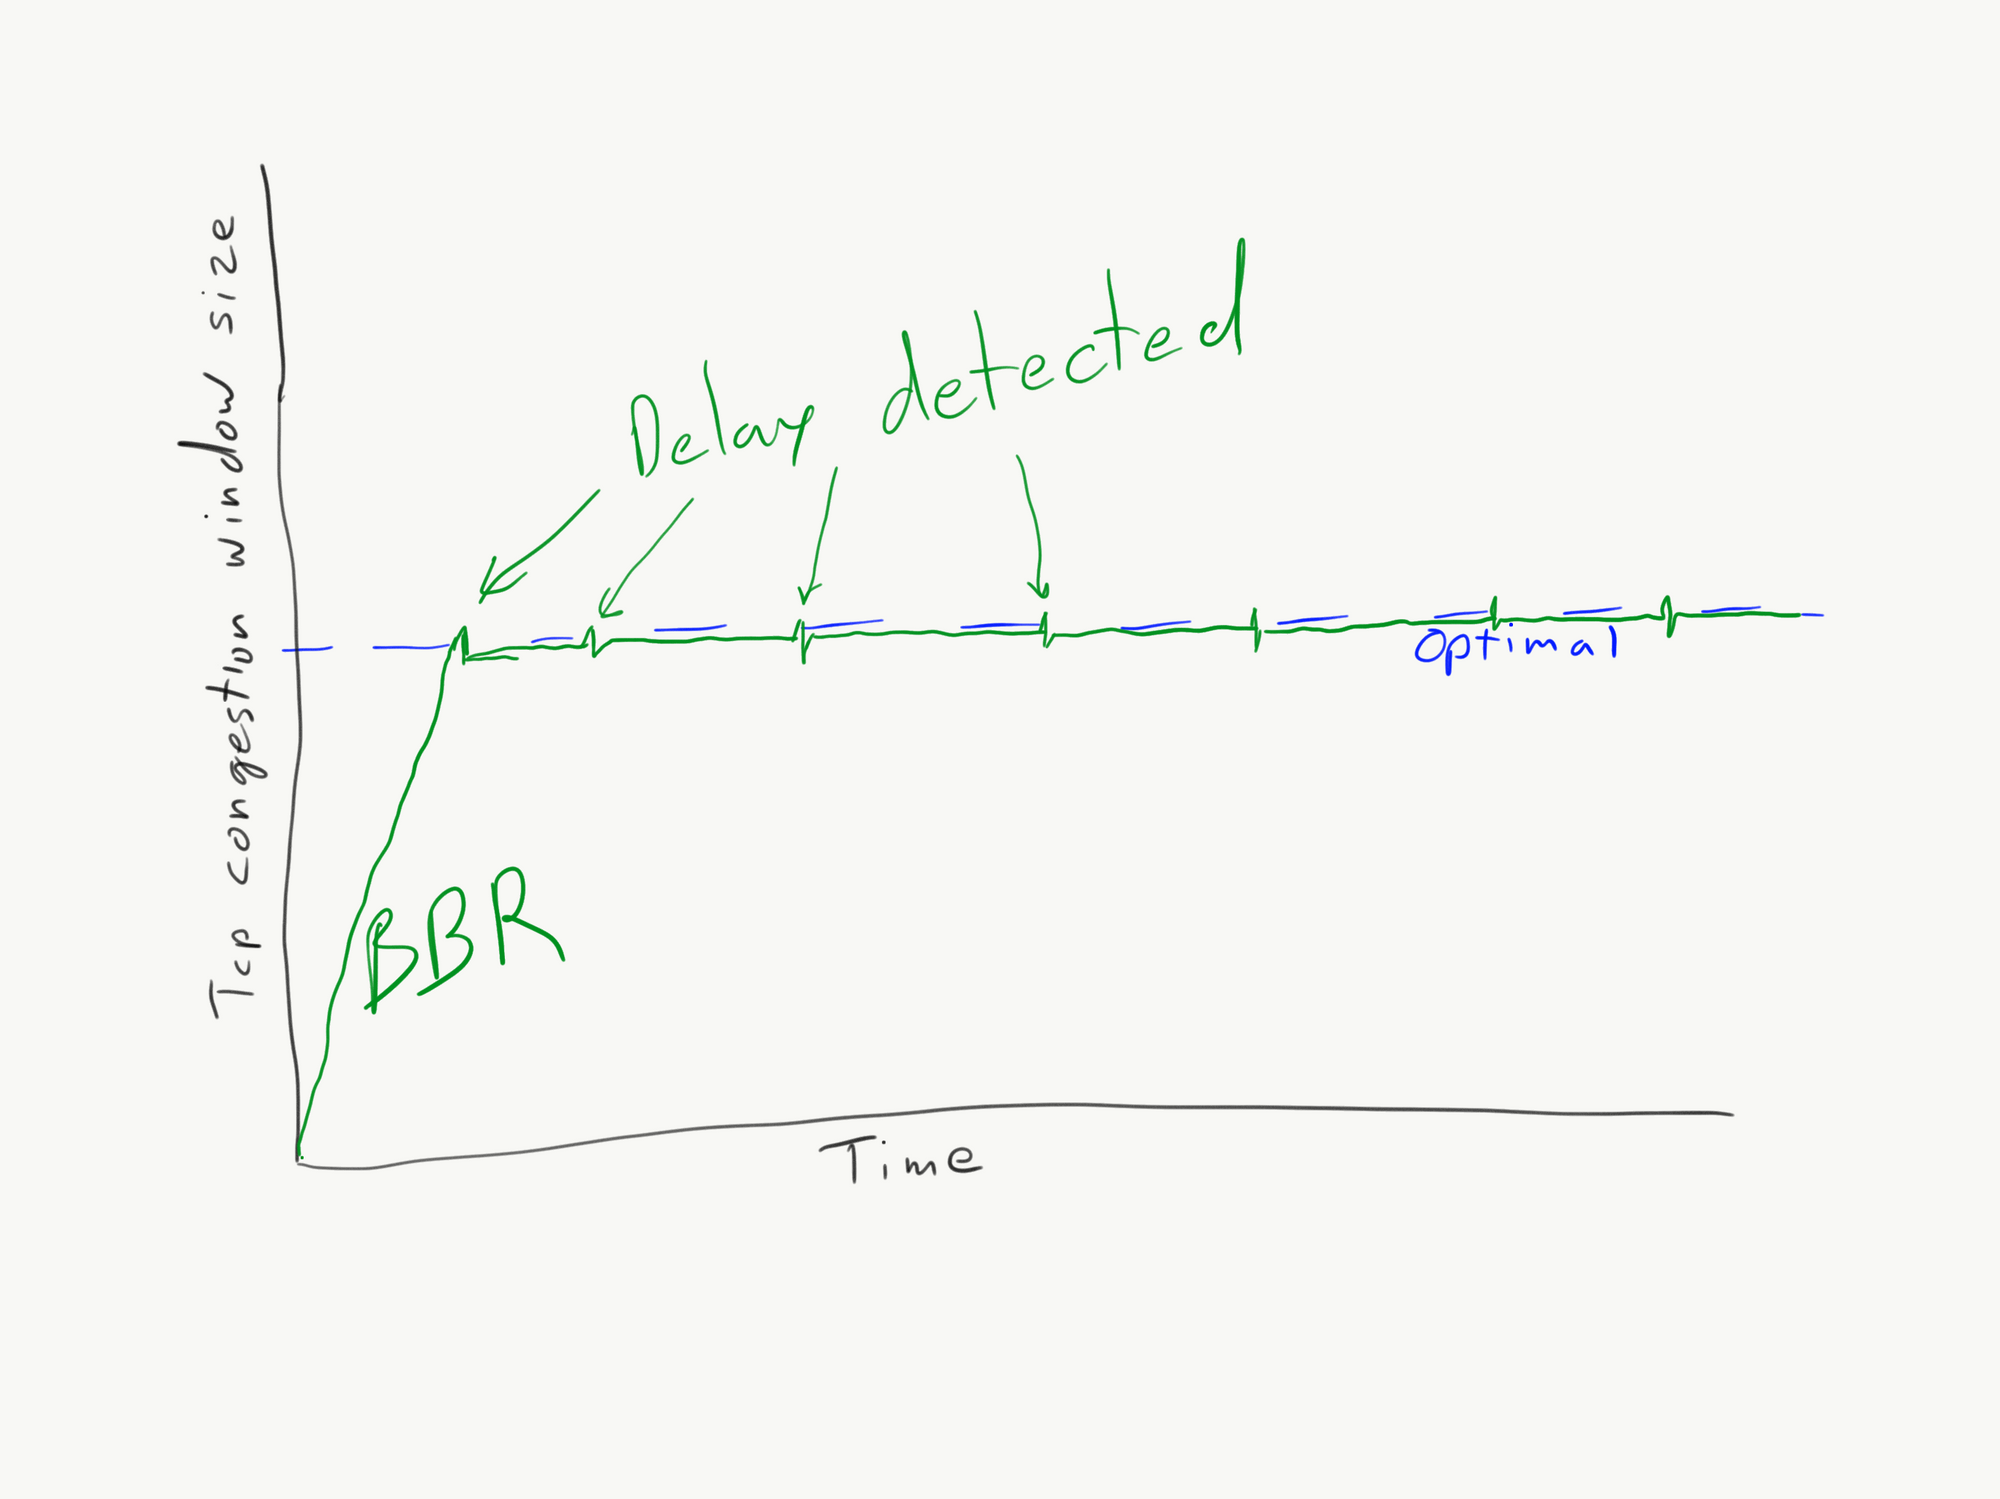 BBR congestion window graph.